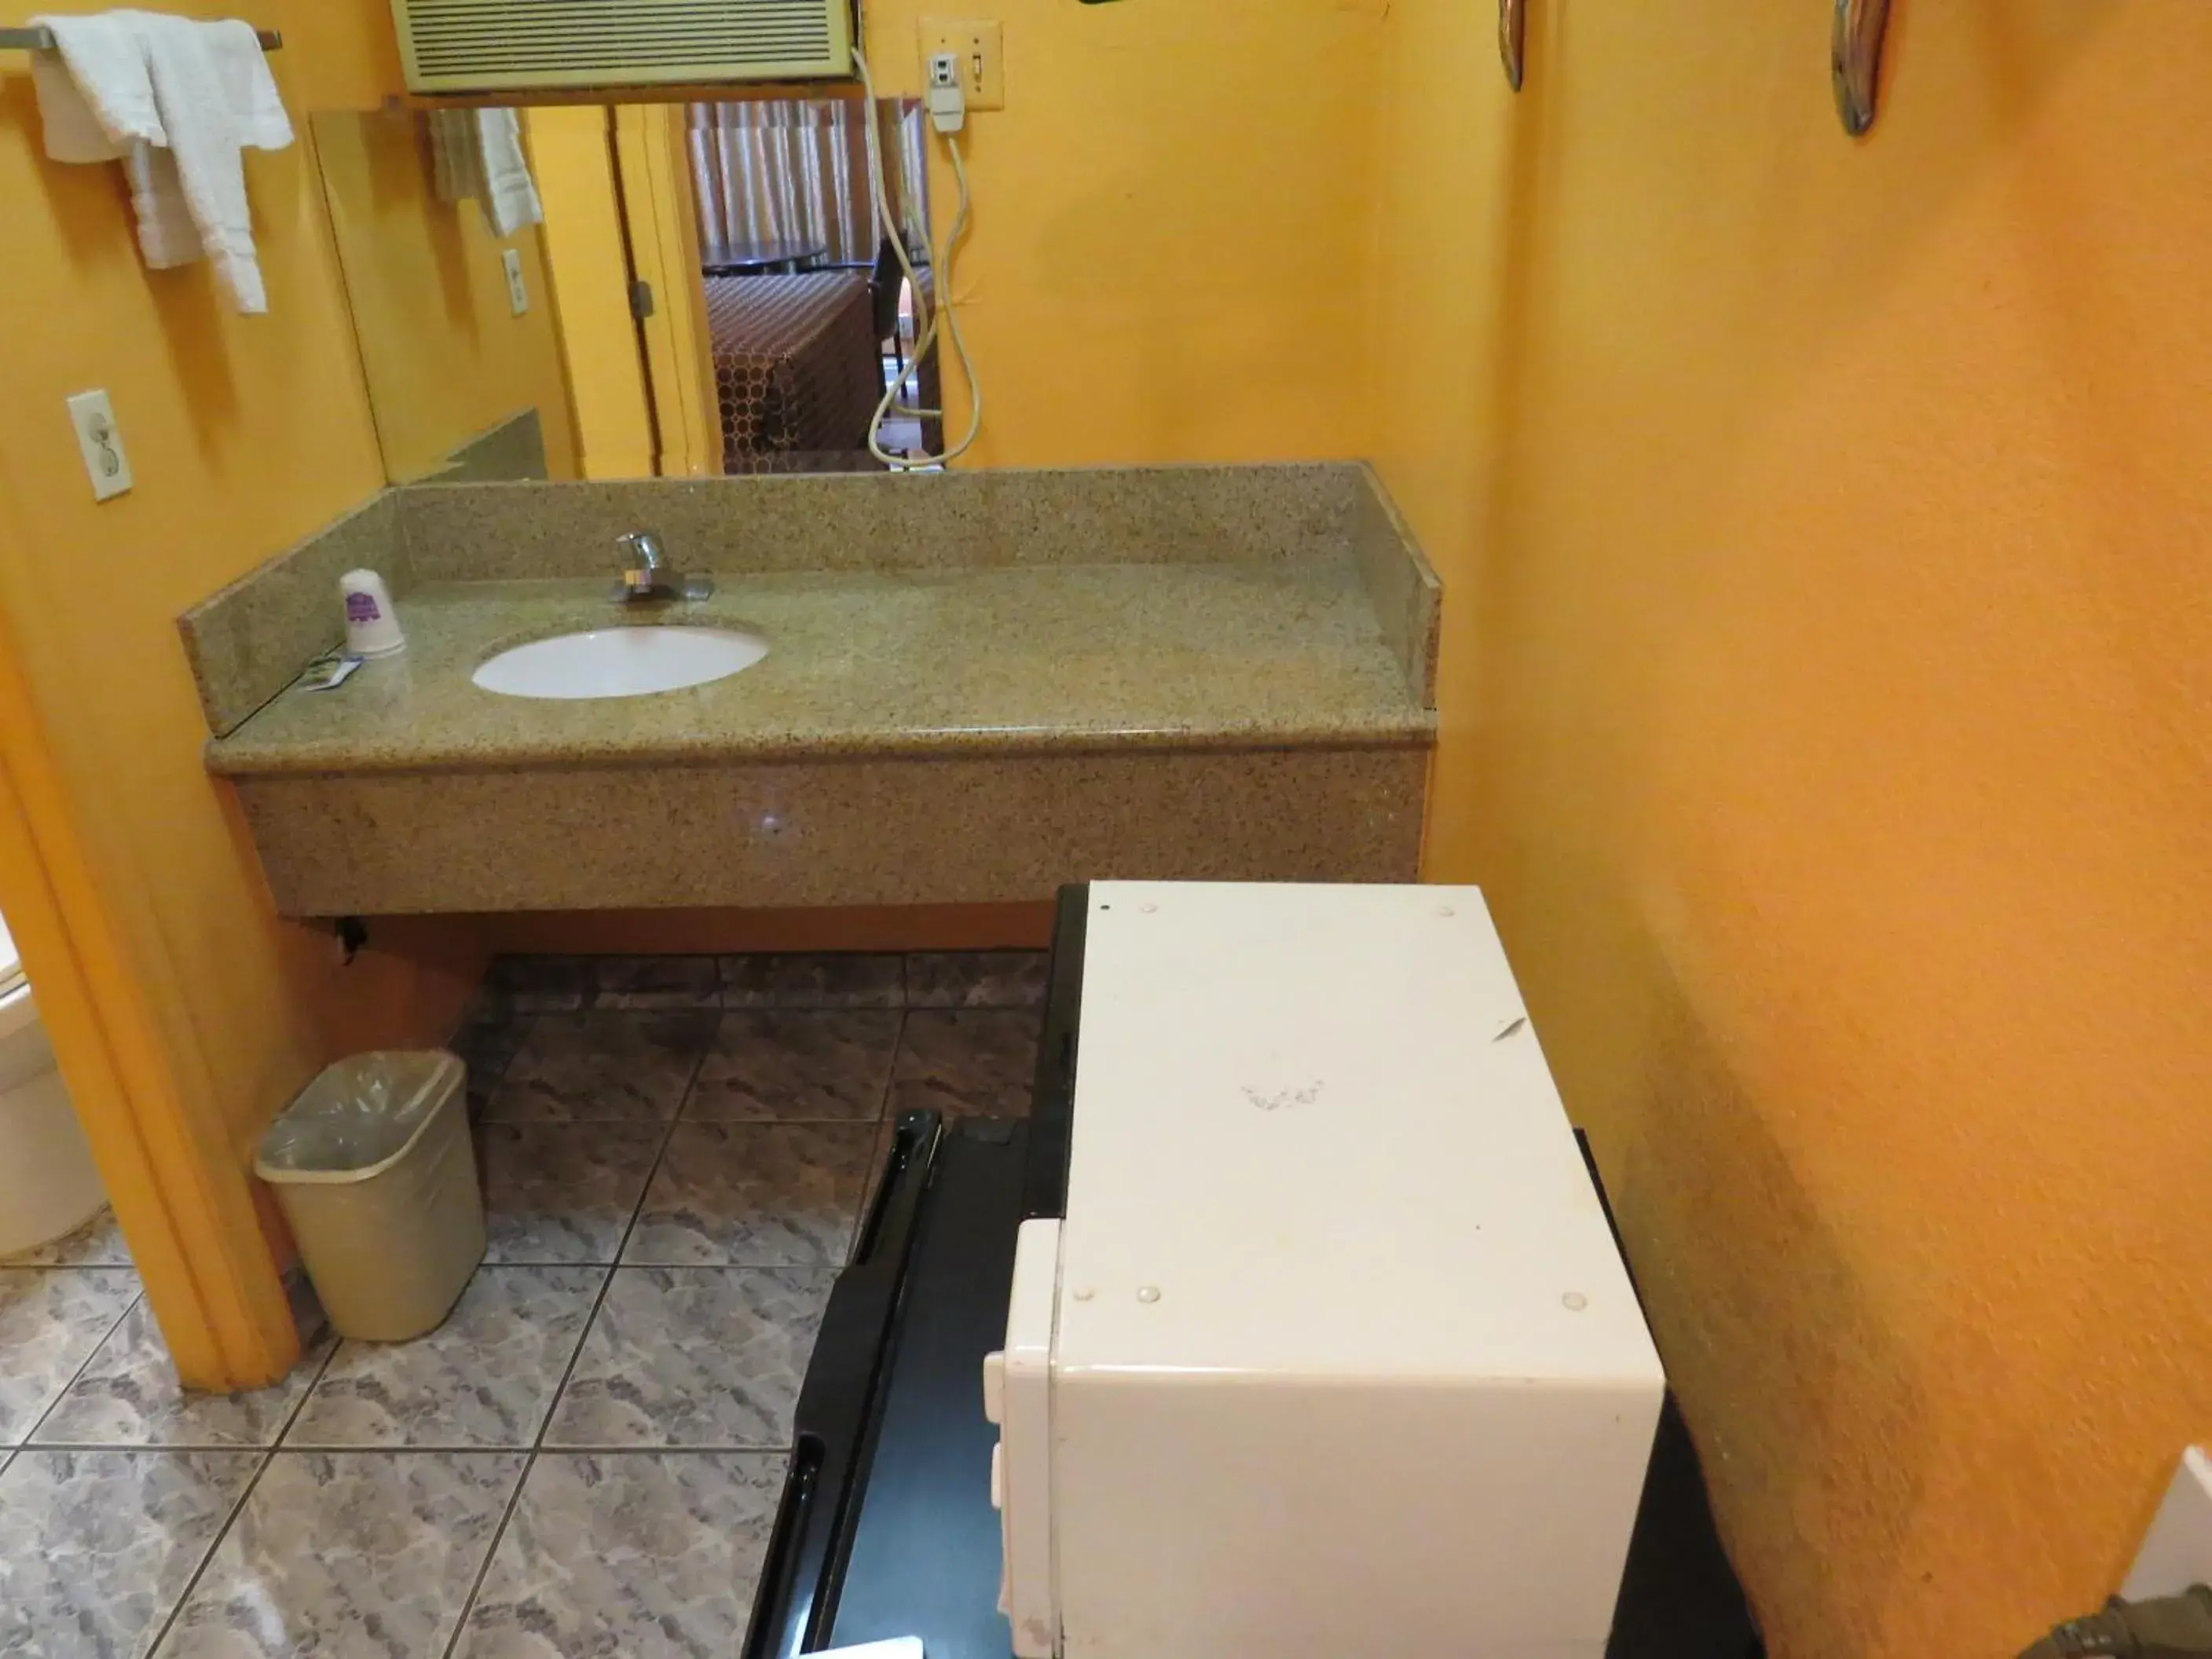 Bathroom in Calico Motel